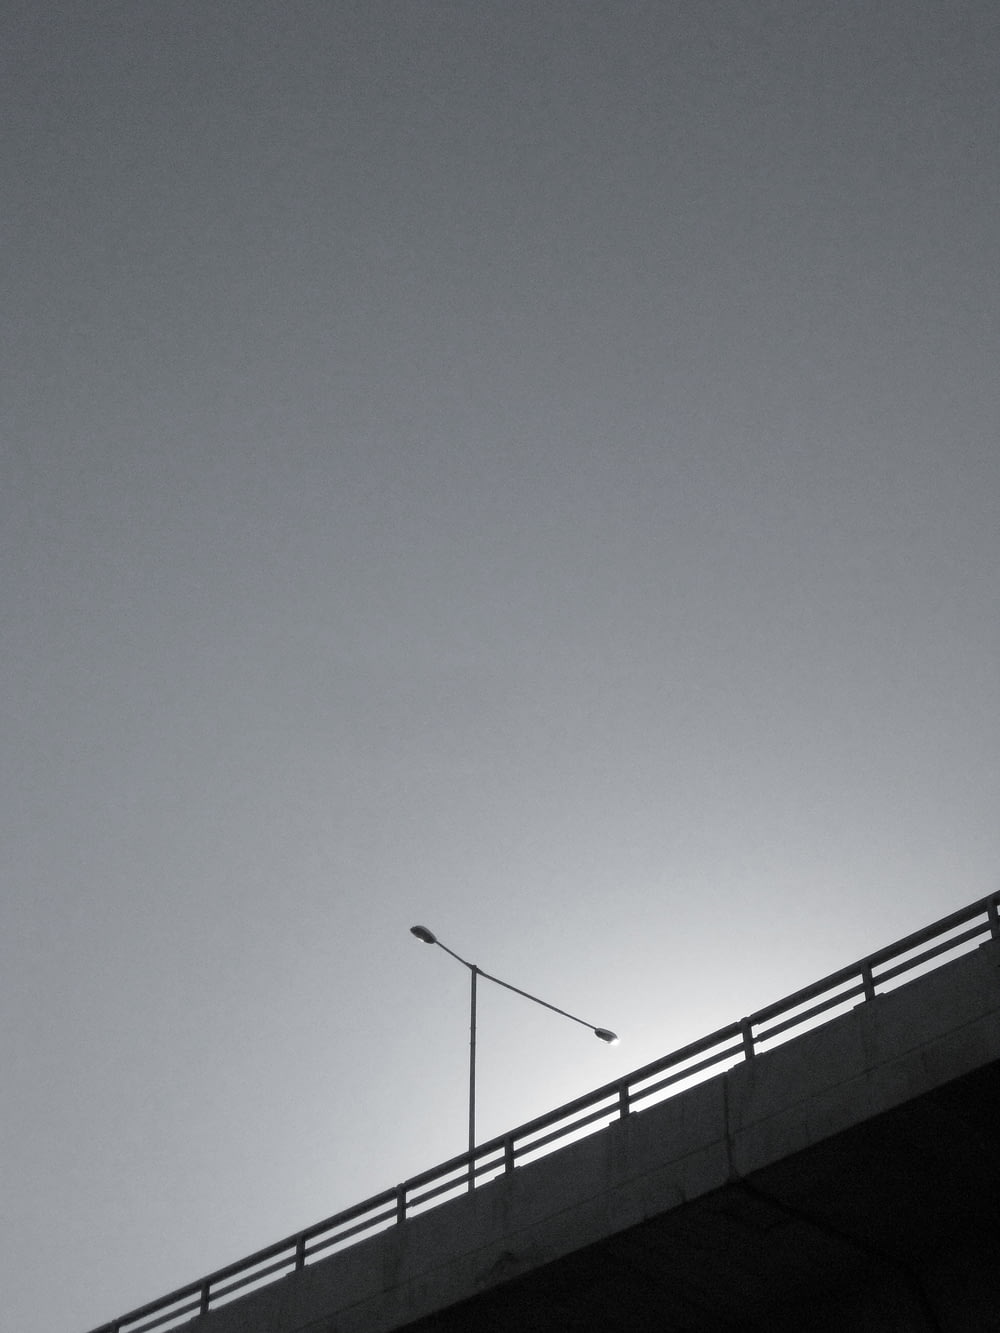 grayscale photo of bridge with postl ight